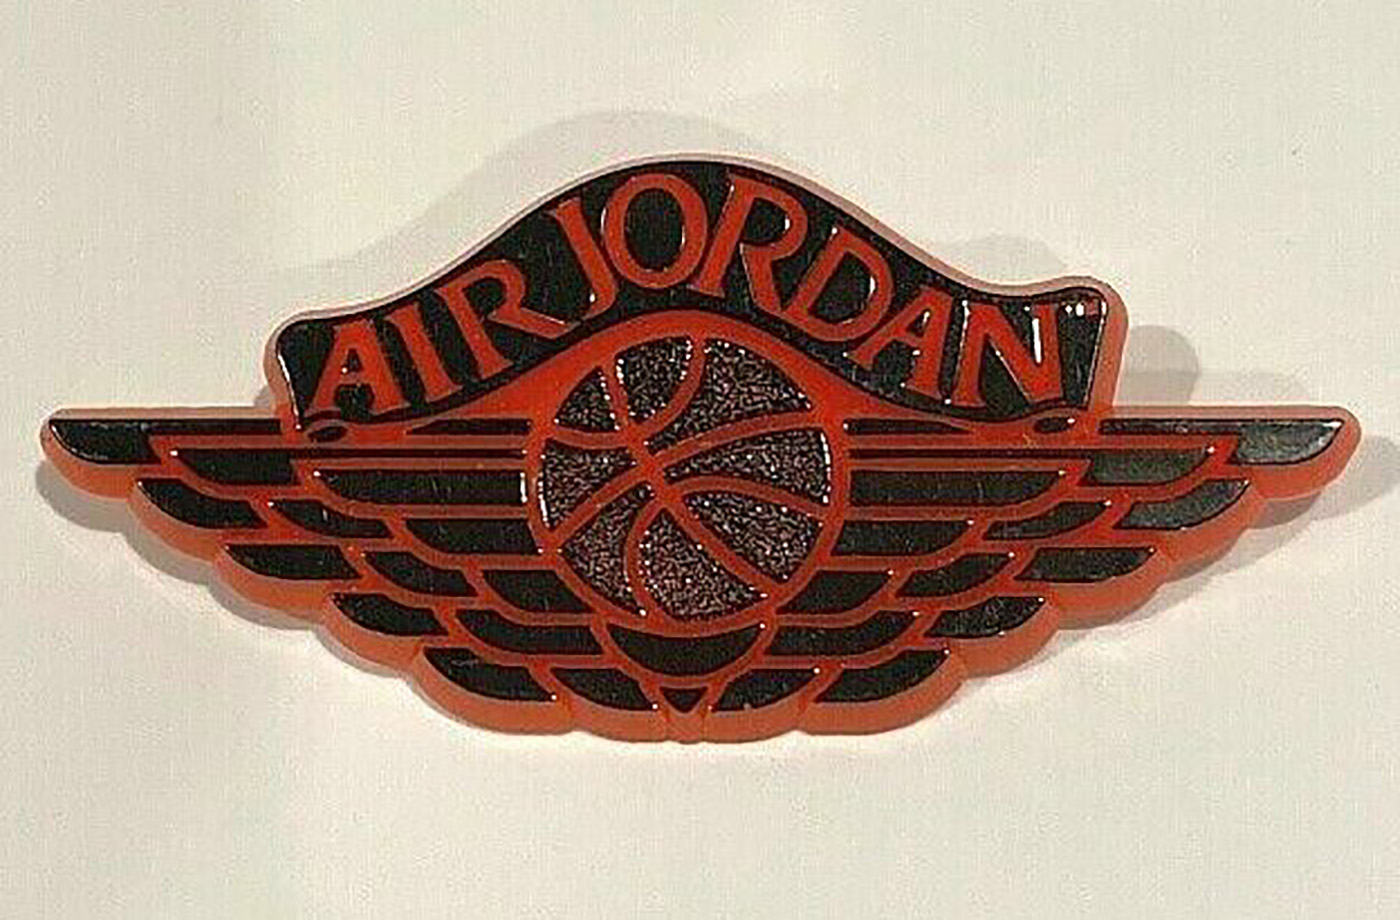 black air jordan logo